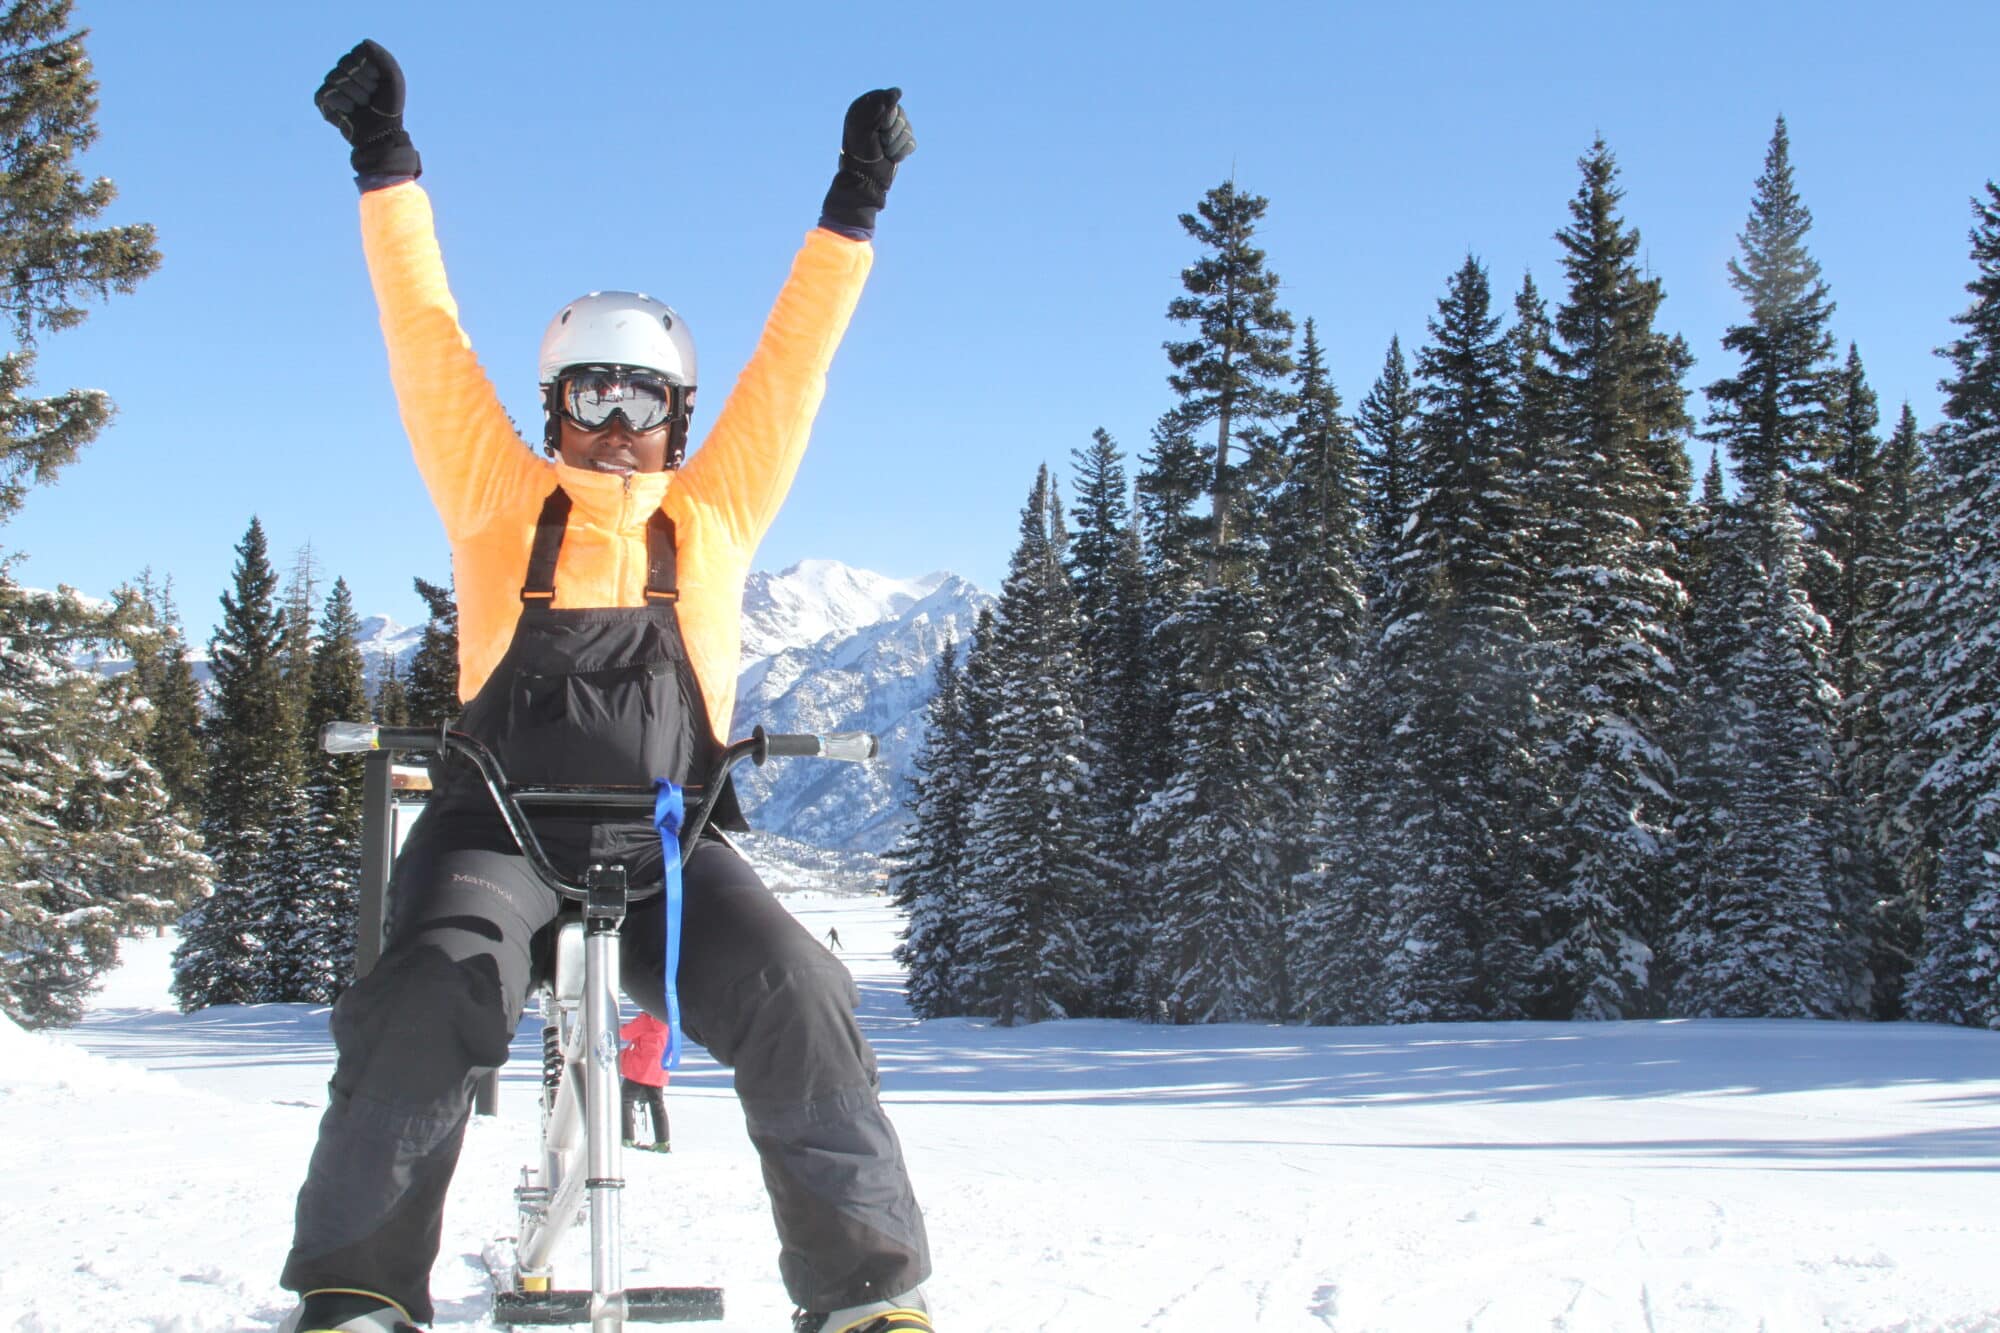 Adaptive ski bike rider celebrates on top of the mountain